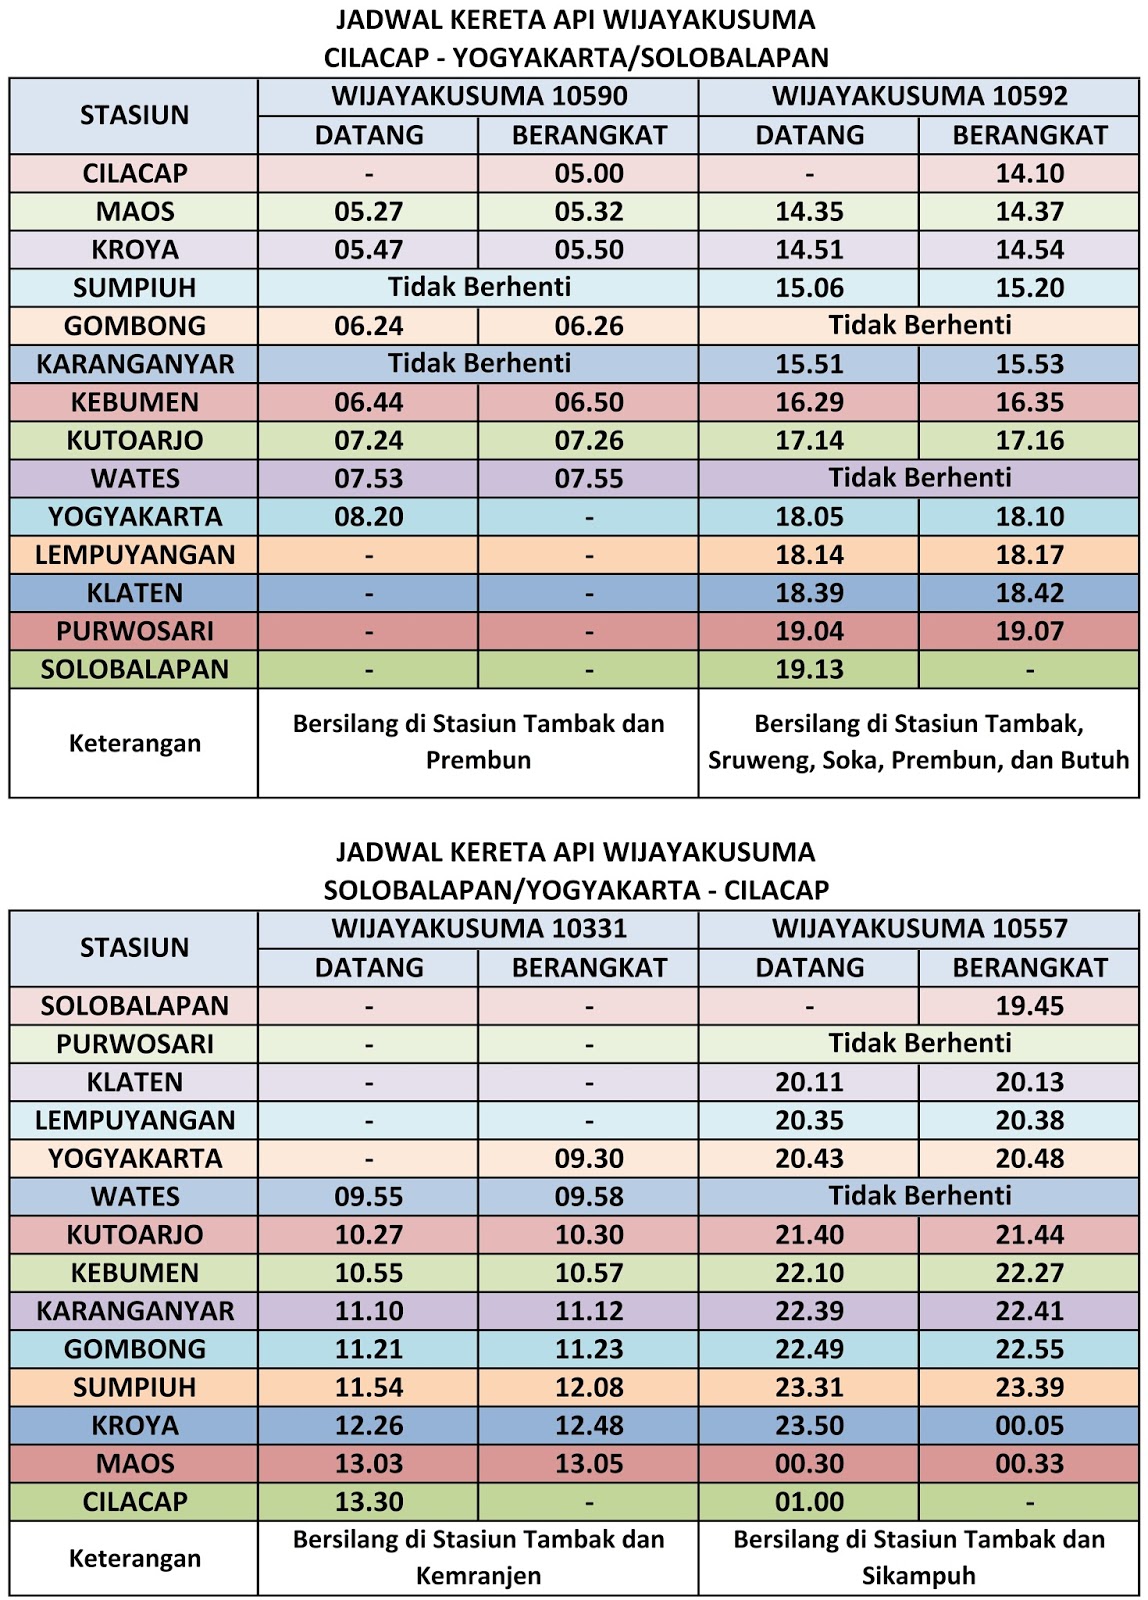 Jadwal Kereta Api Wijayakusuma (Cilacap  Yogyakarta/Solobalapan PP)